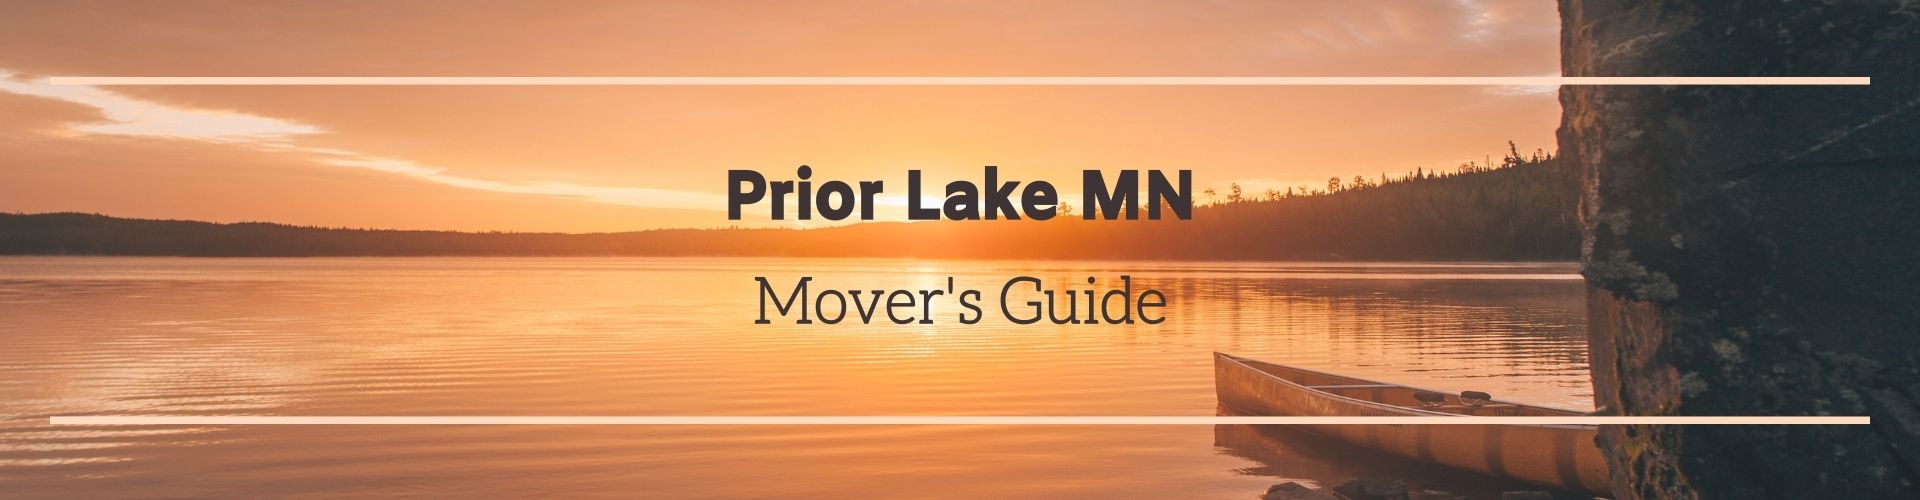 Prior Lake MN Mover's Guide